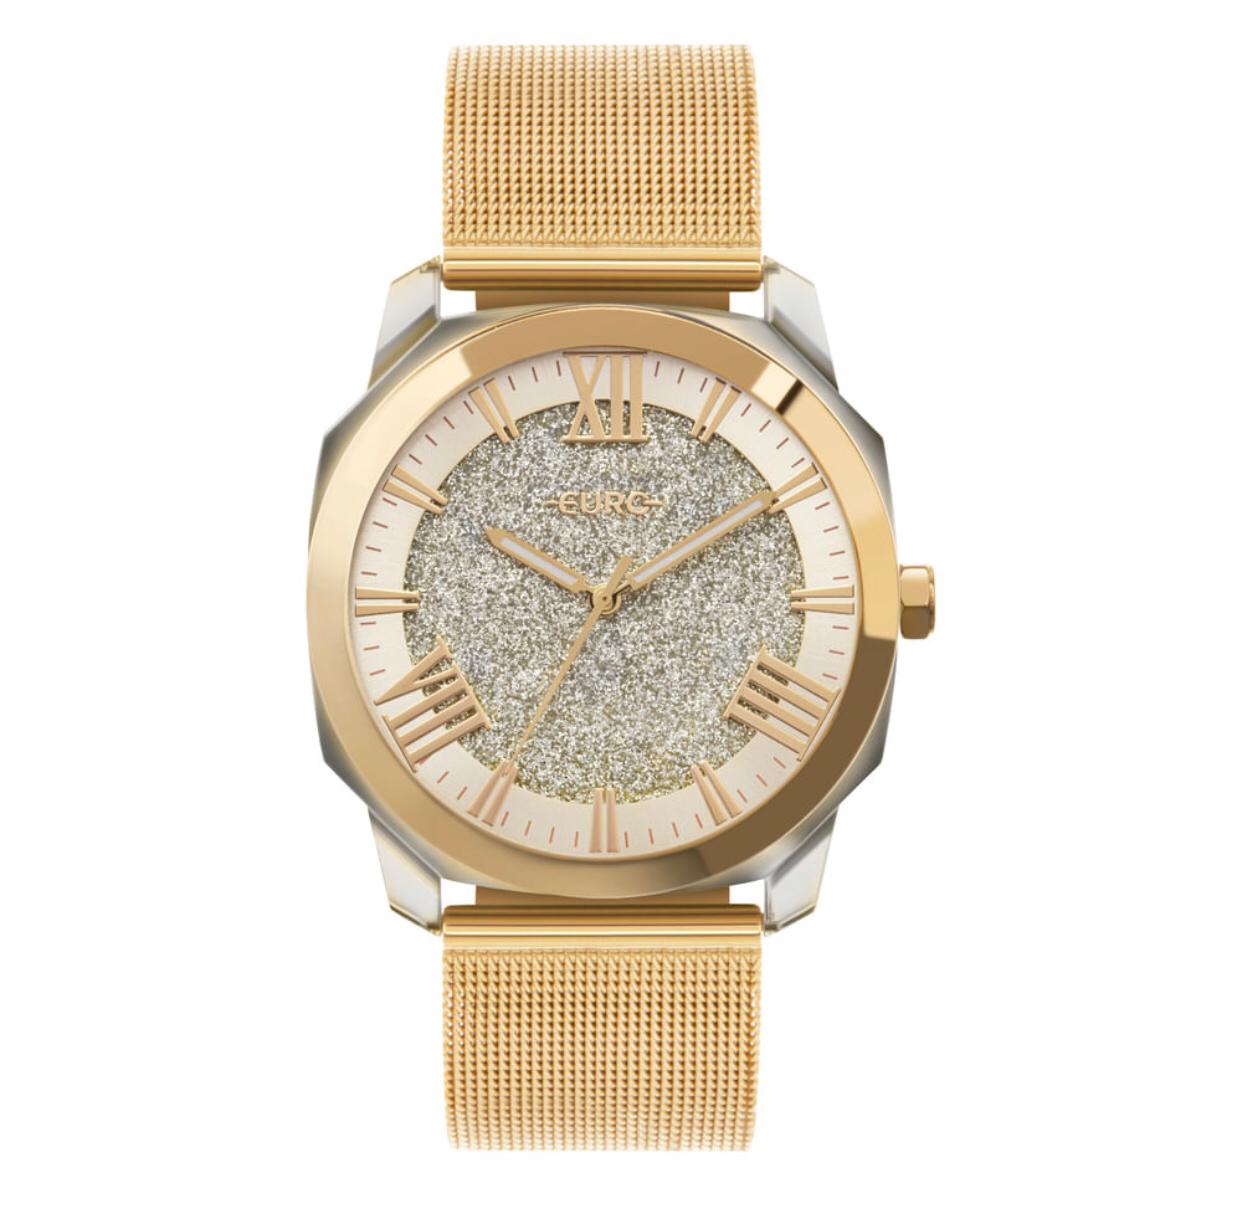 Relógio Euro Feminino Next Dourado - EU2035YSQ/7D